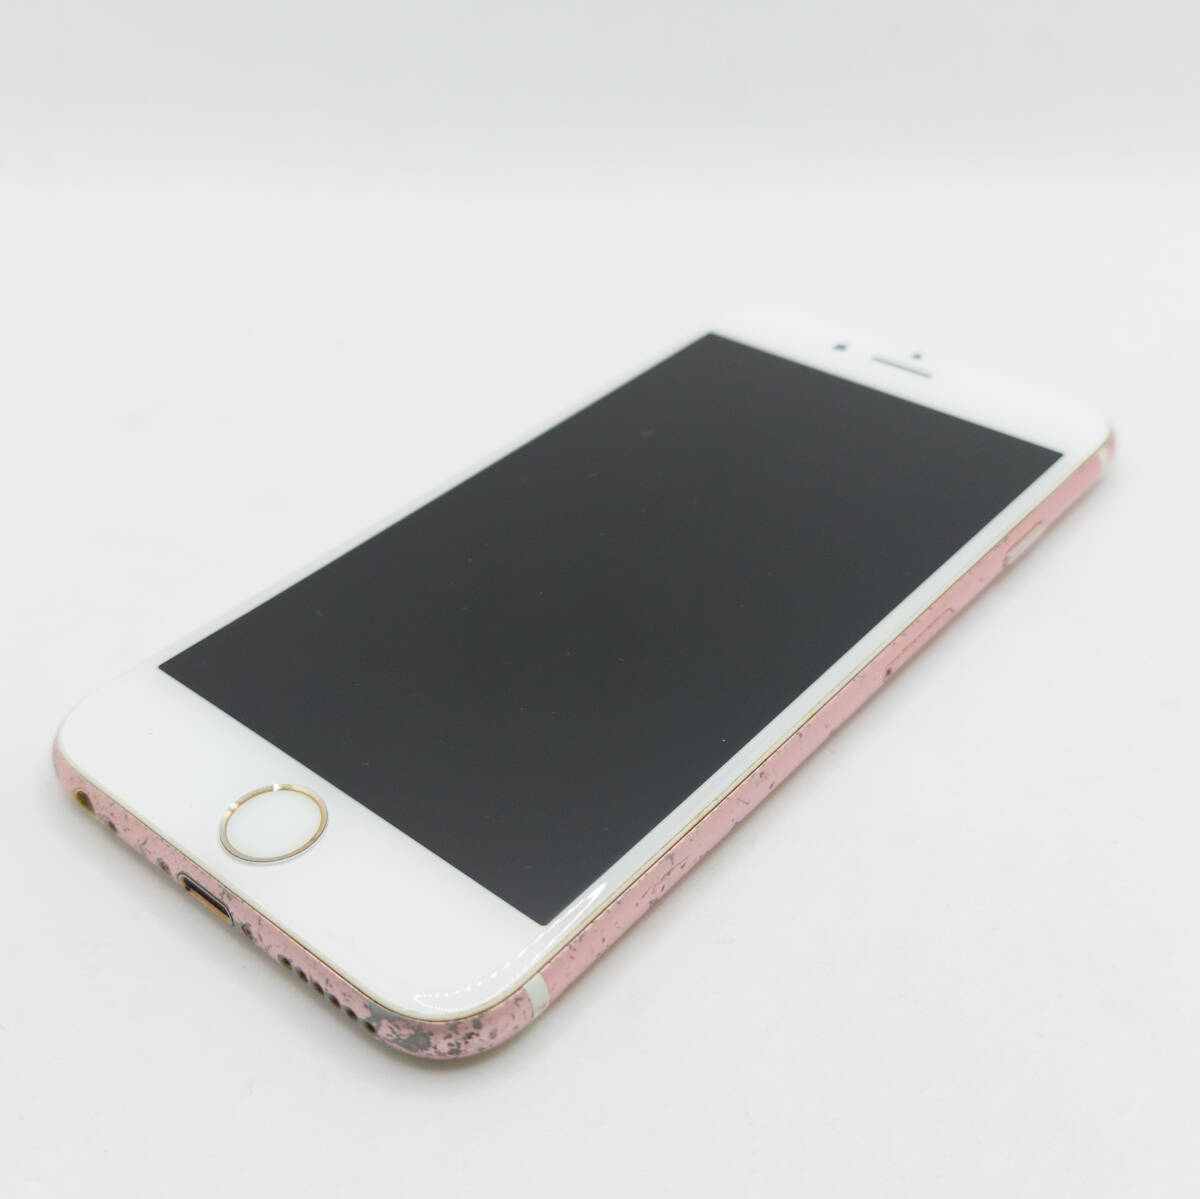 Apple iPhone 6s ローズゴールド 64GB SIMフリー アップル アイフォン A1688 スマートフォン スマホ 携帯電話 本体 #ST-02988_画像5